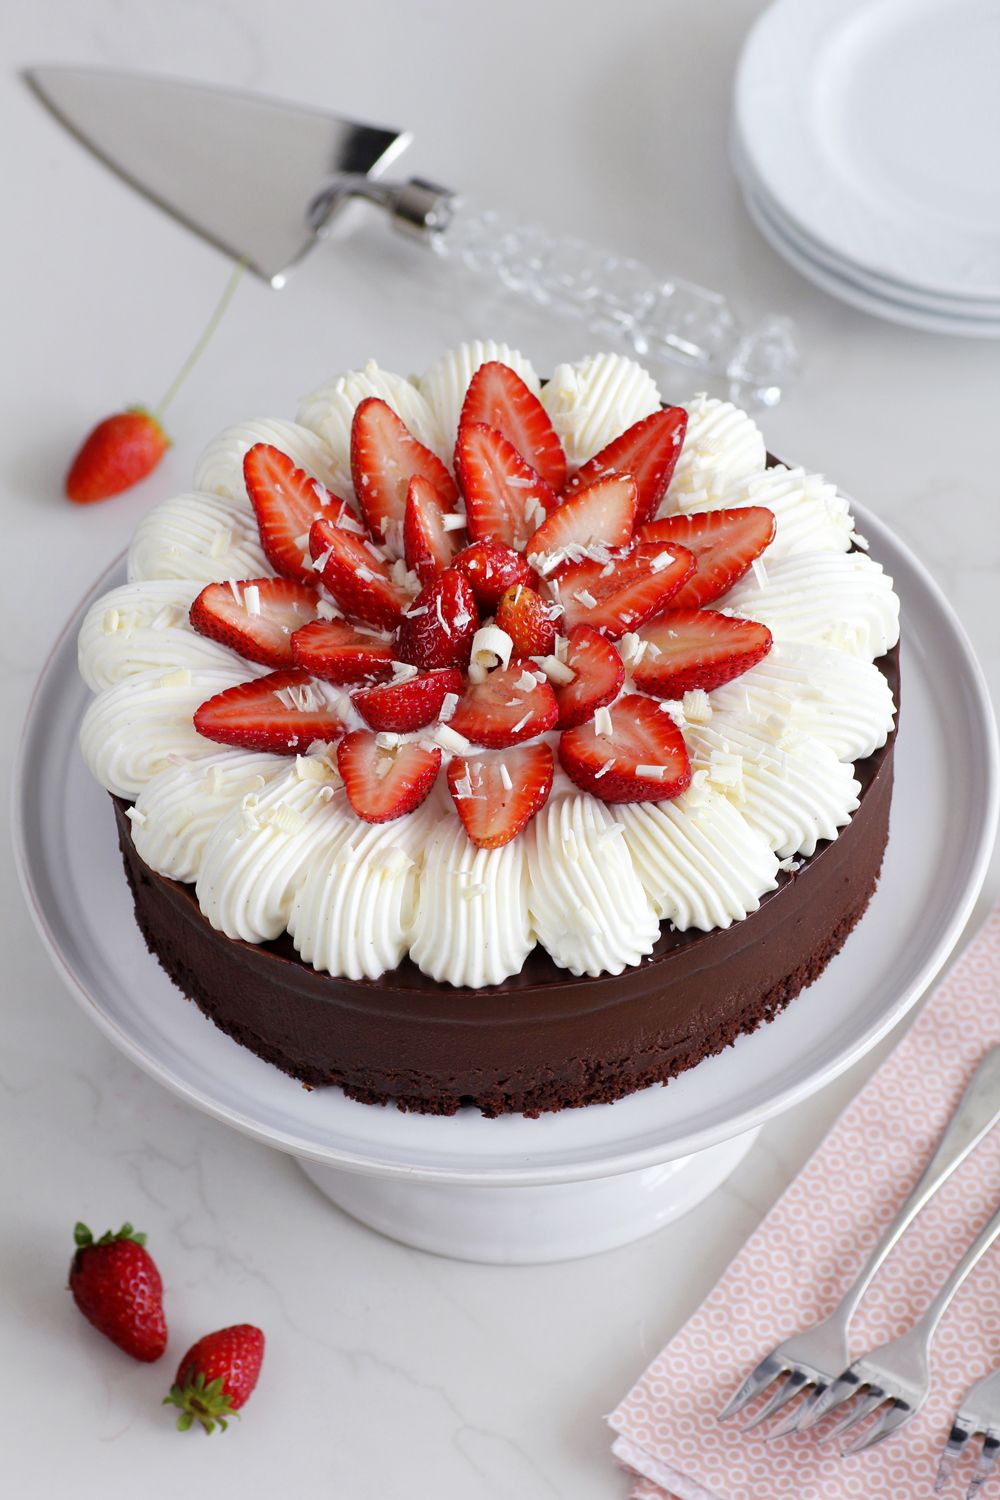 Gluten Free Chocolate Cake with Strawberry